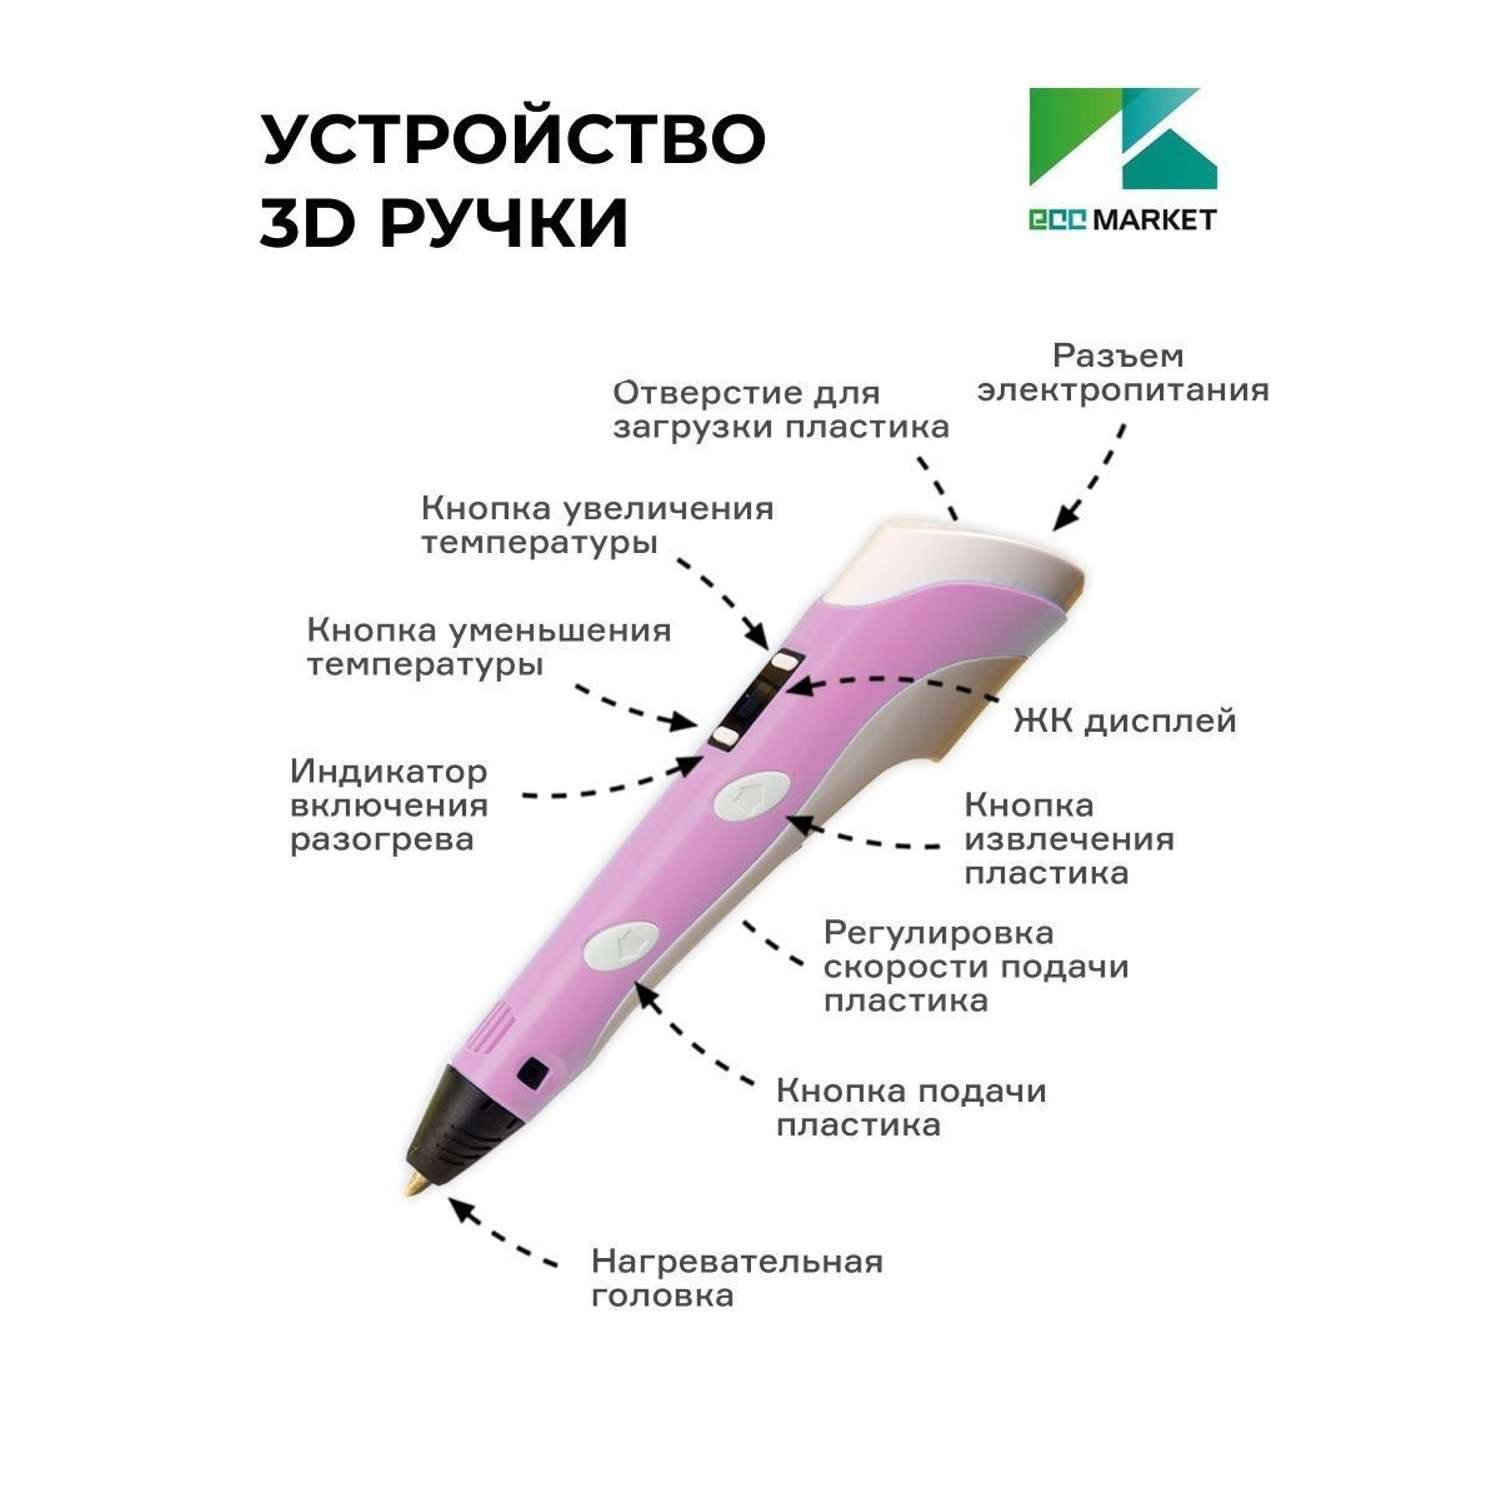 3D ручка ECC Market 3DPEN 3 7 розовая - фото 5